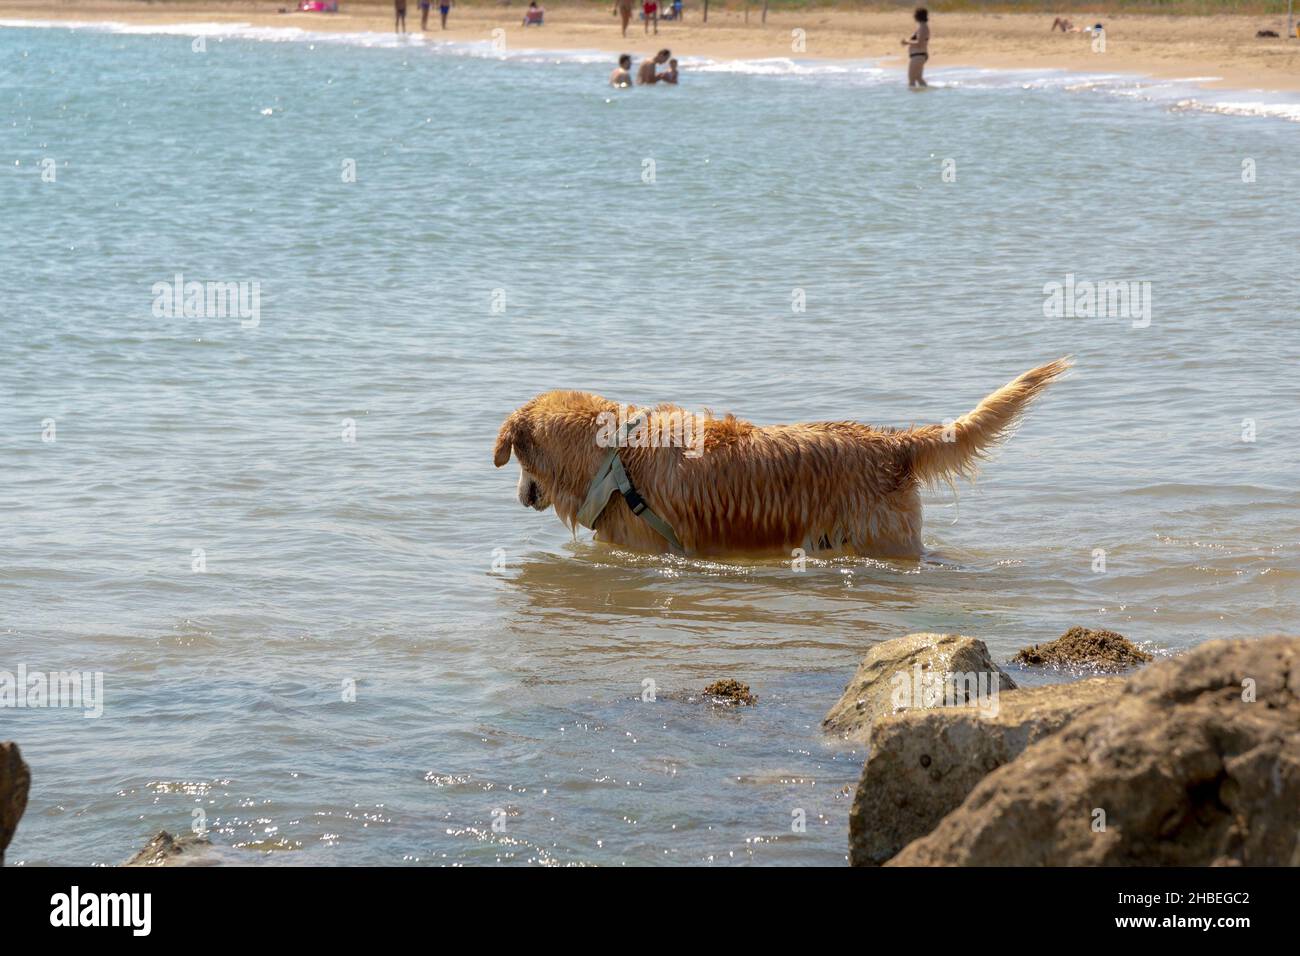 Dog at the sea having fun in the water near the rocks Stock Photo